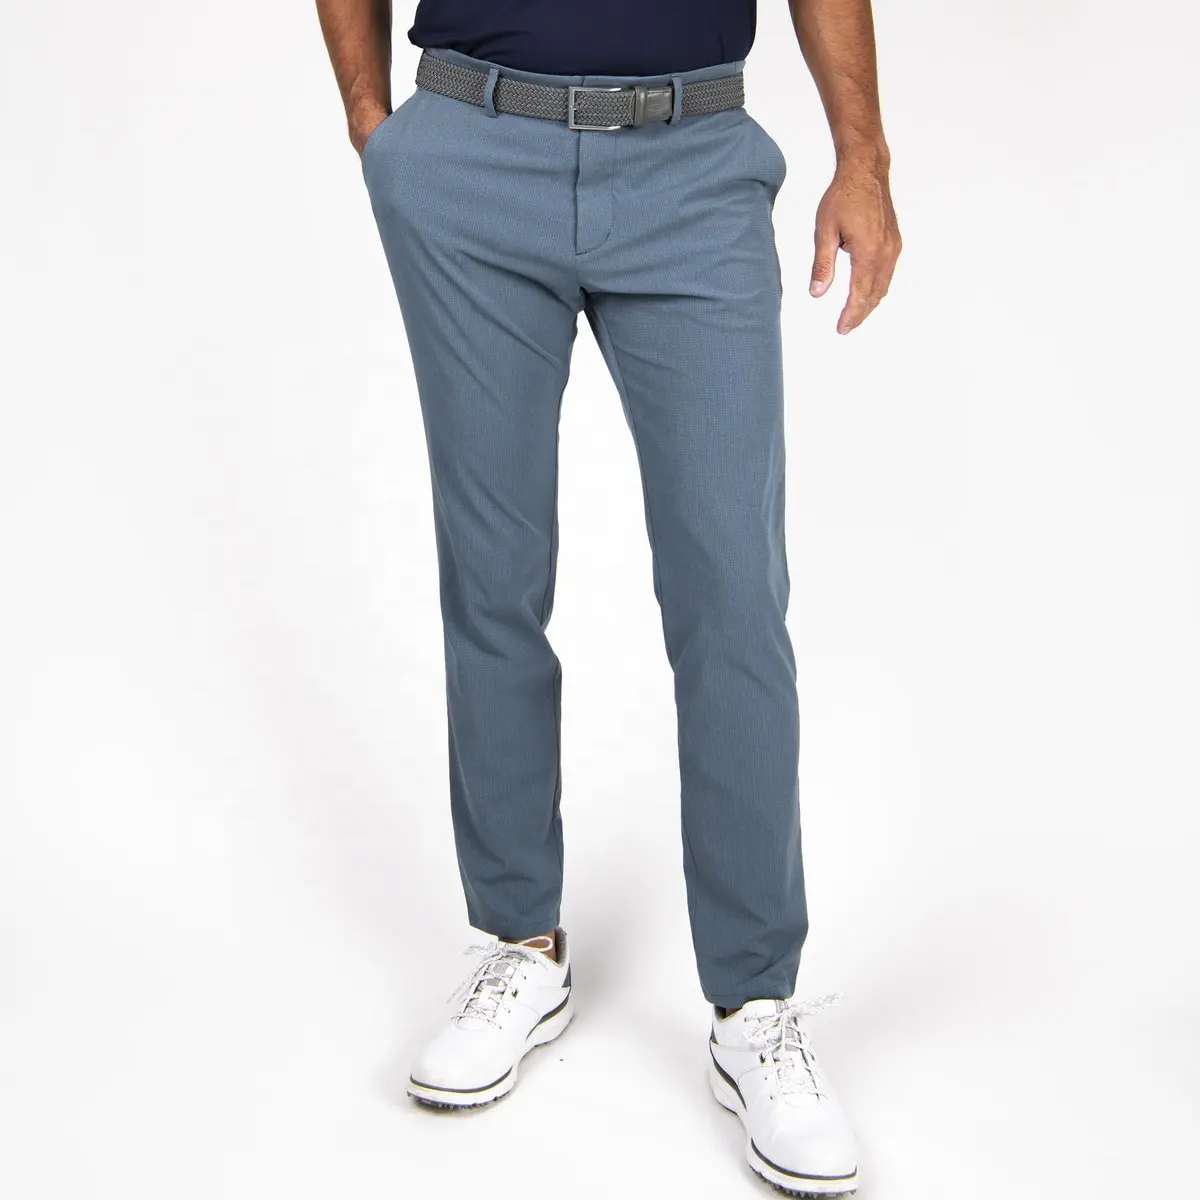 Özel erkek Golf pantolon 4 yollu streç Chino pantolon çabuk kuruyan Slim Fit hafif Golf pantolon